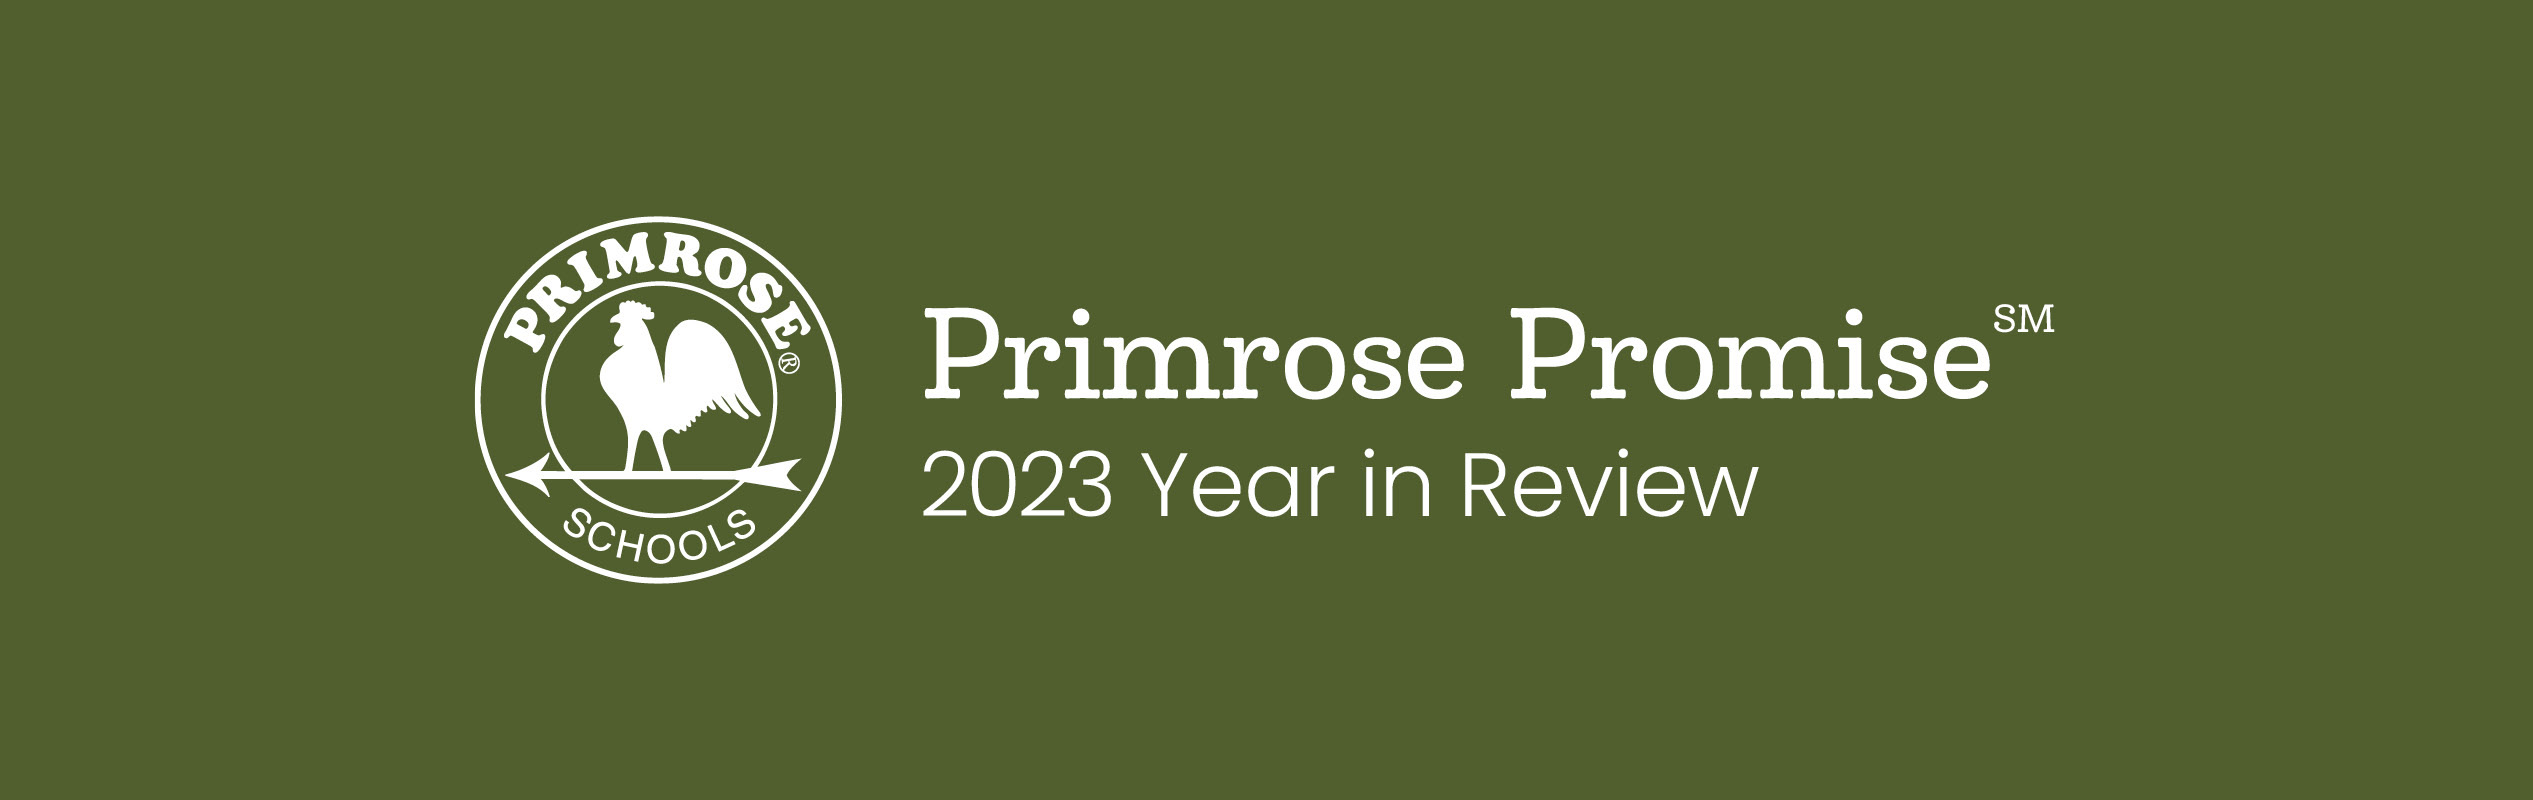 Primrose 2023 year in review